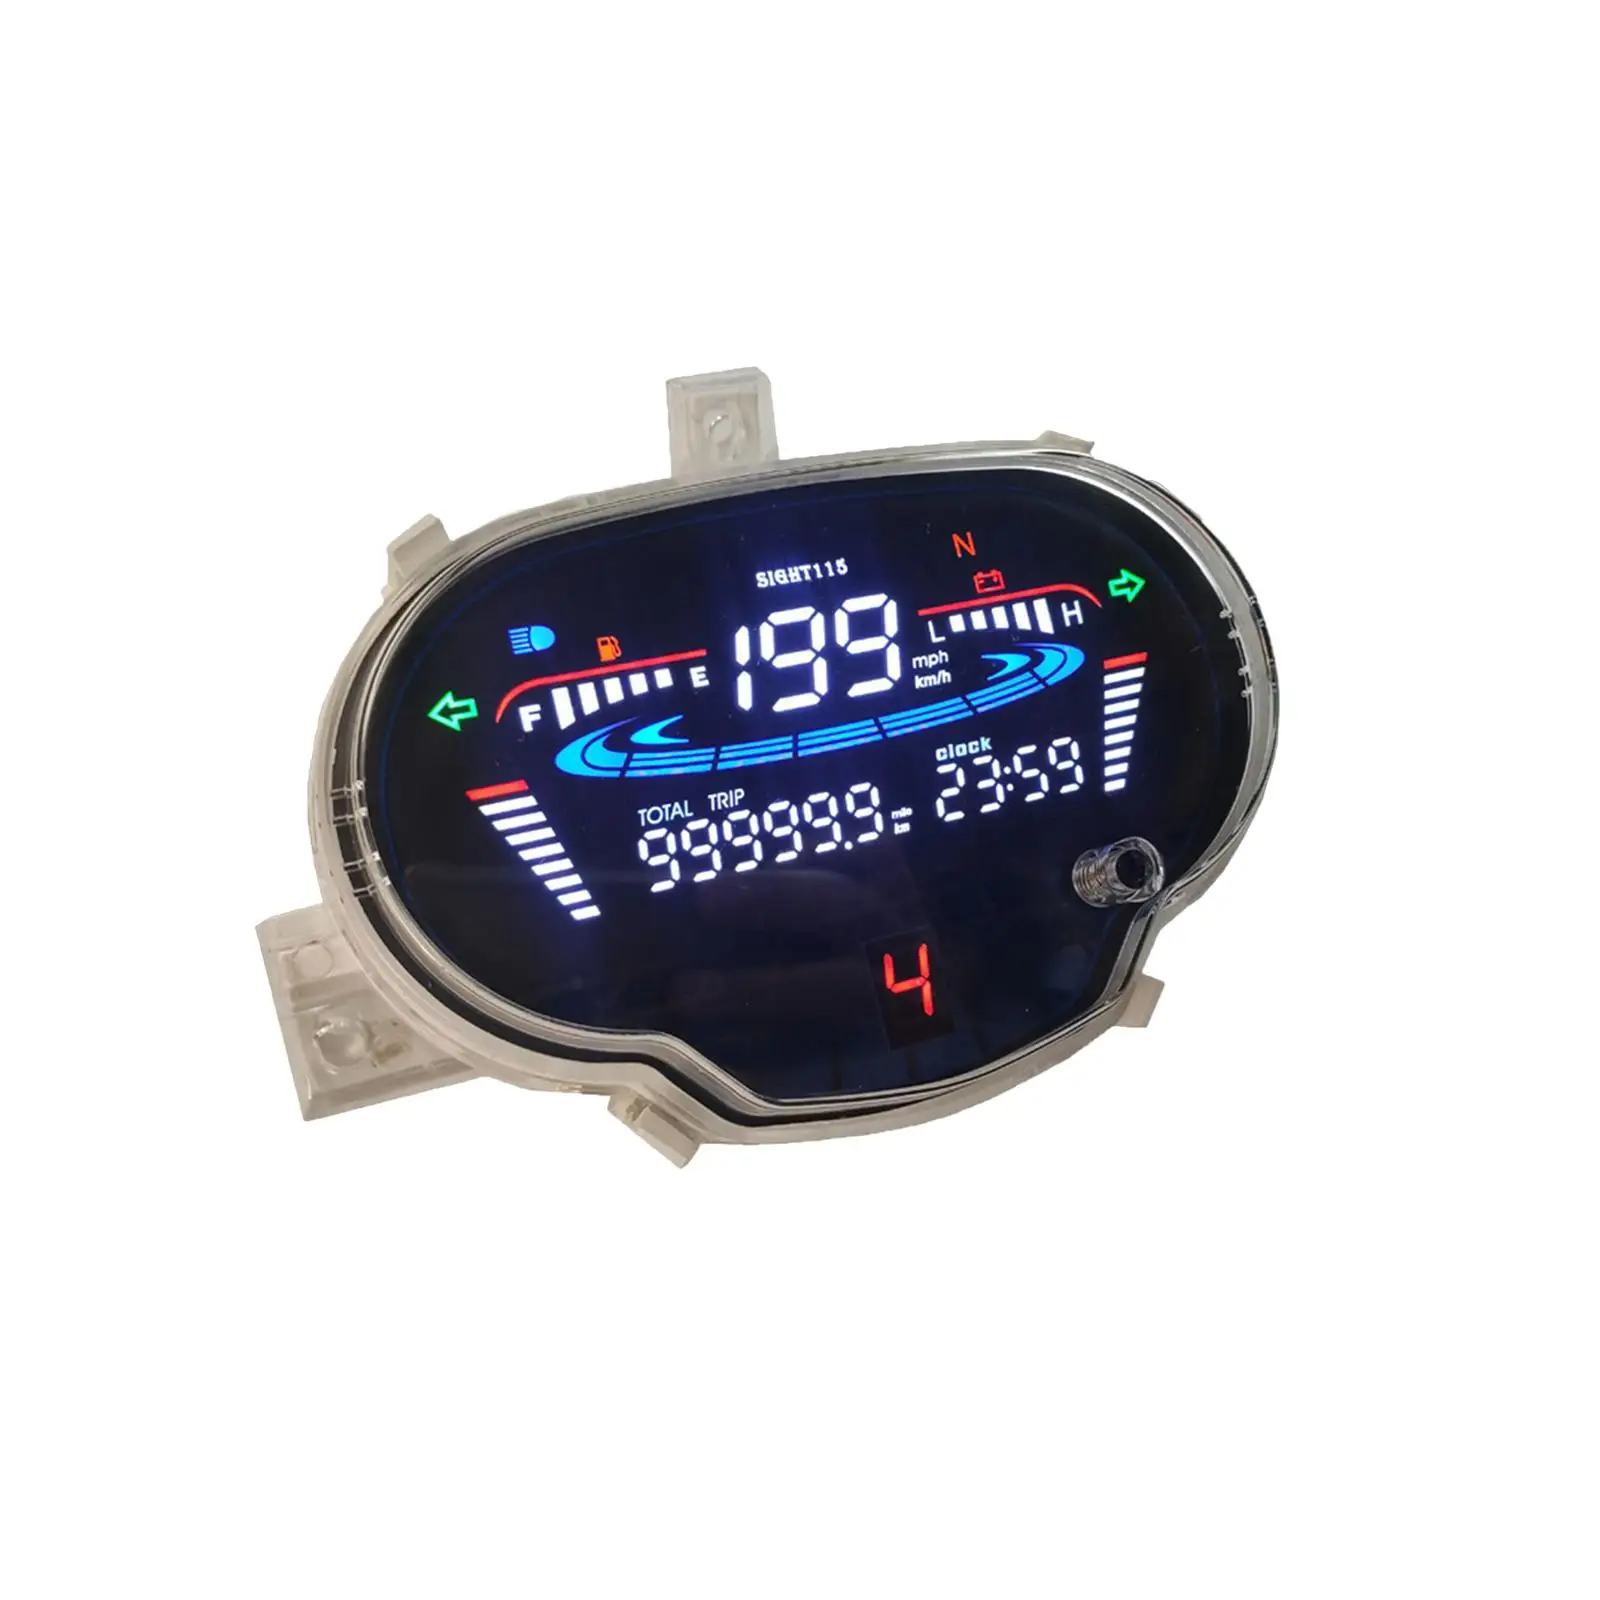 Motorbike LED Digital Speedometer Modification for Yamaha Sight 115 Accessories